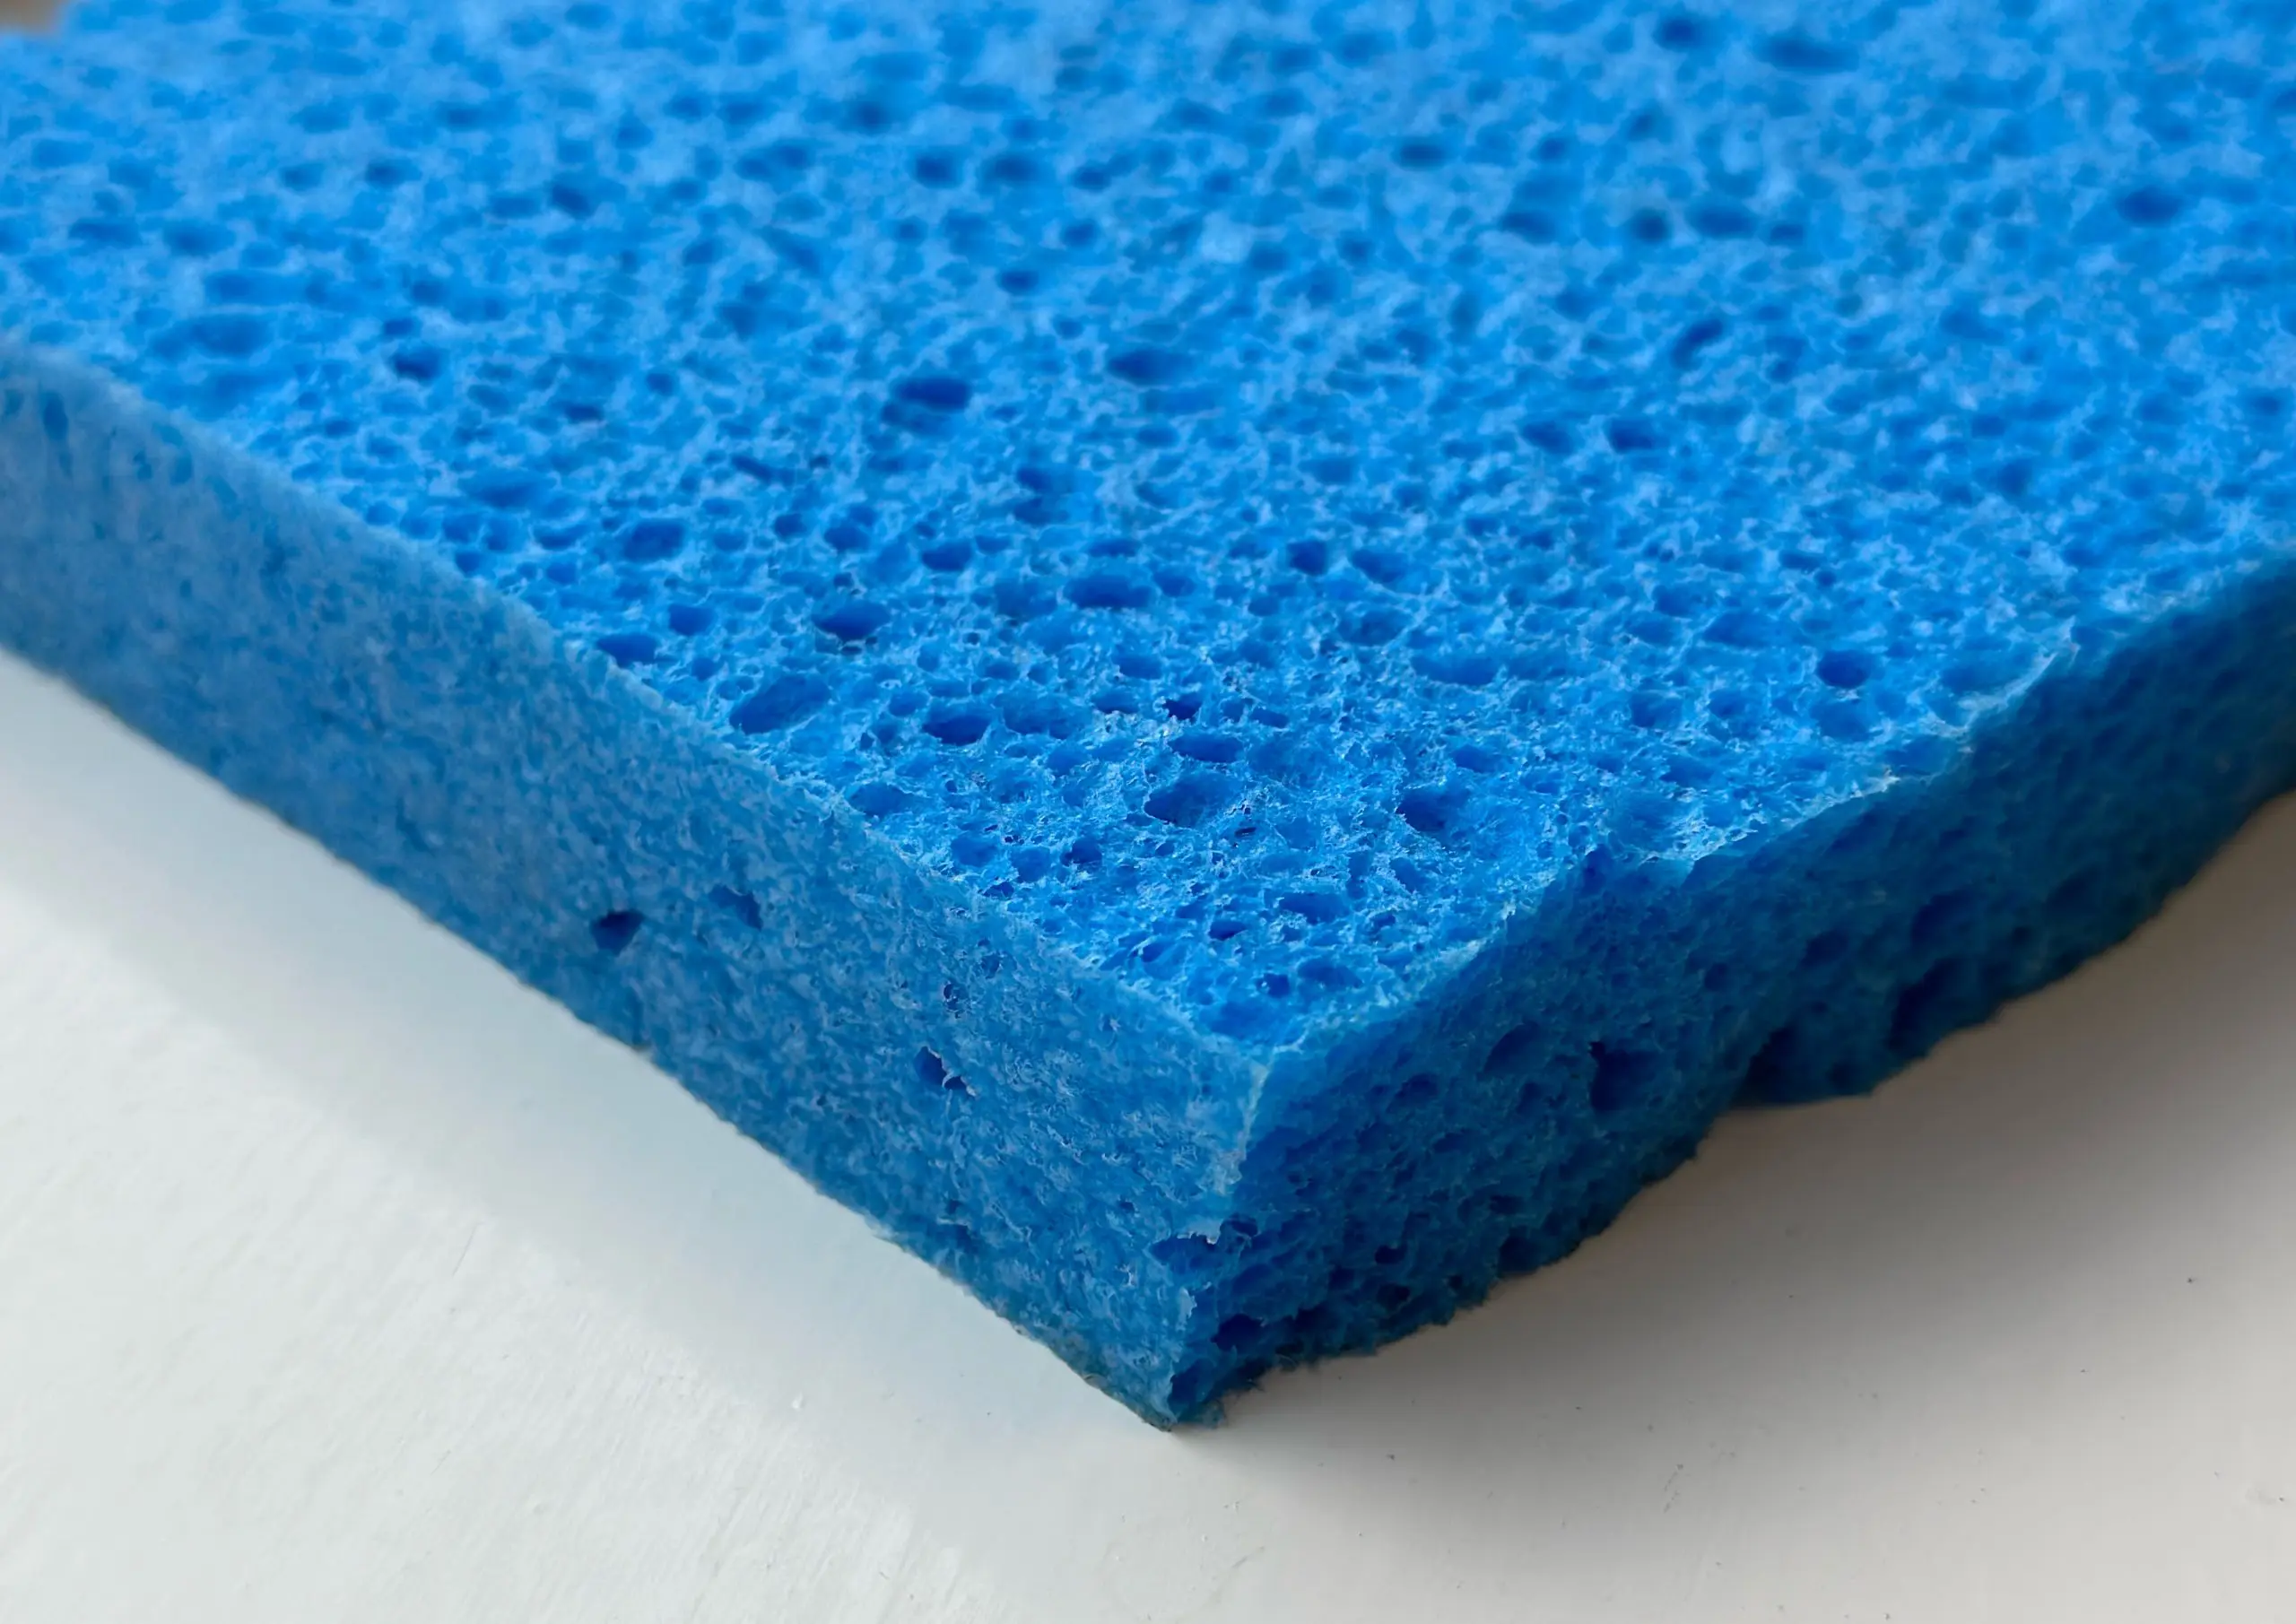 cellulose foam, sponge like texture that retains a lot of moisture